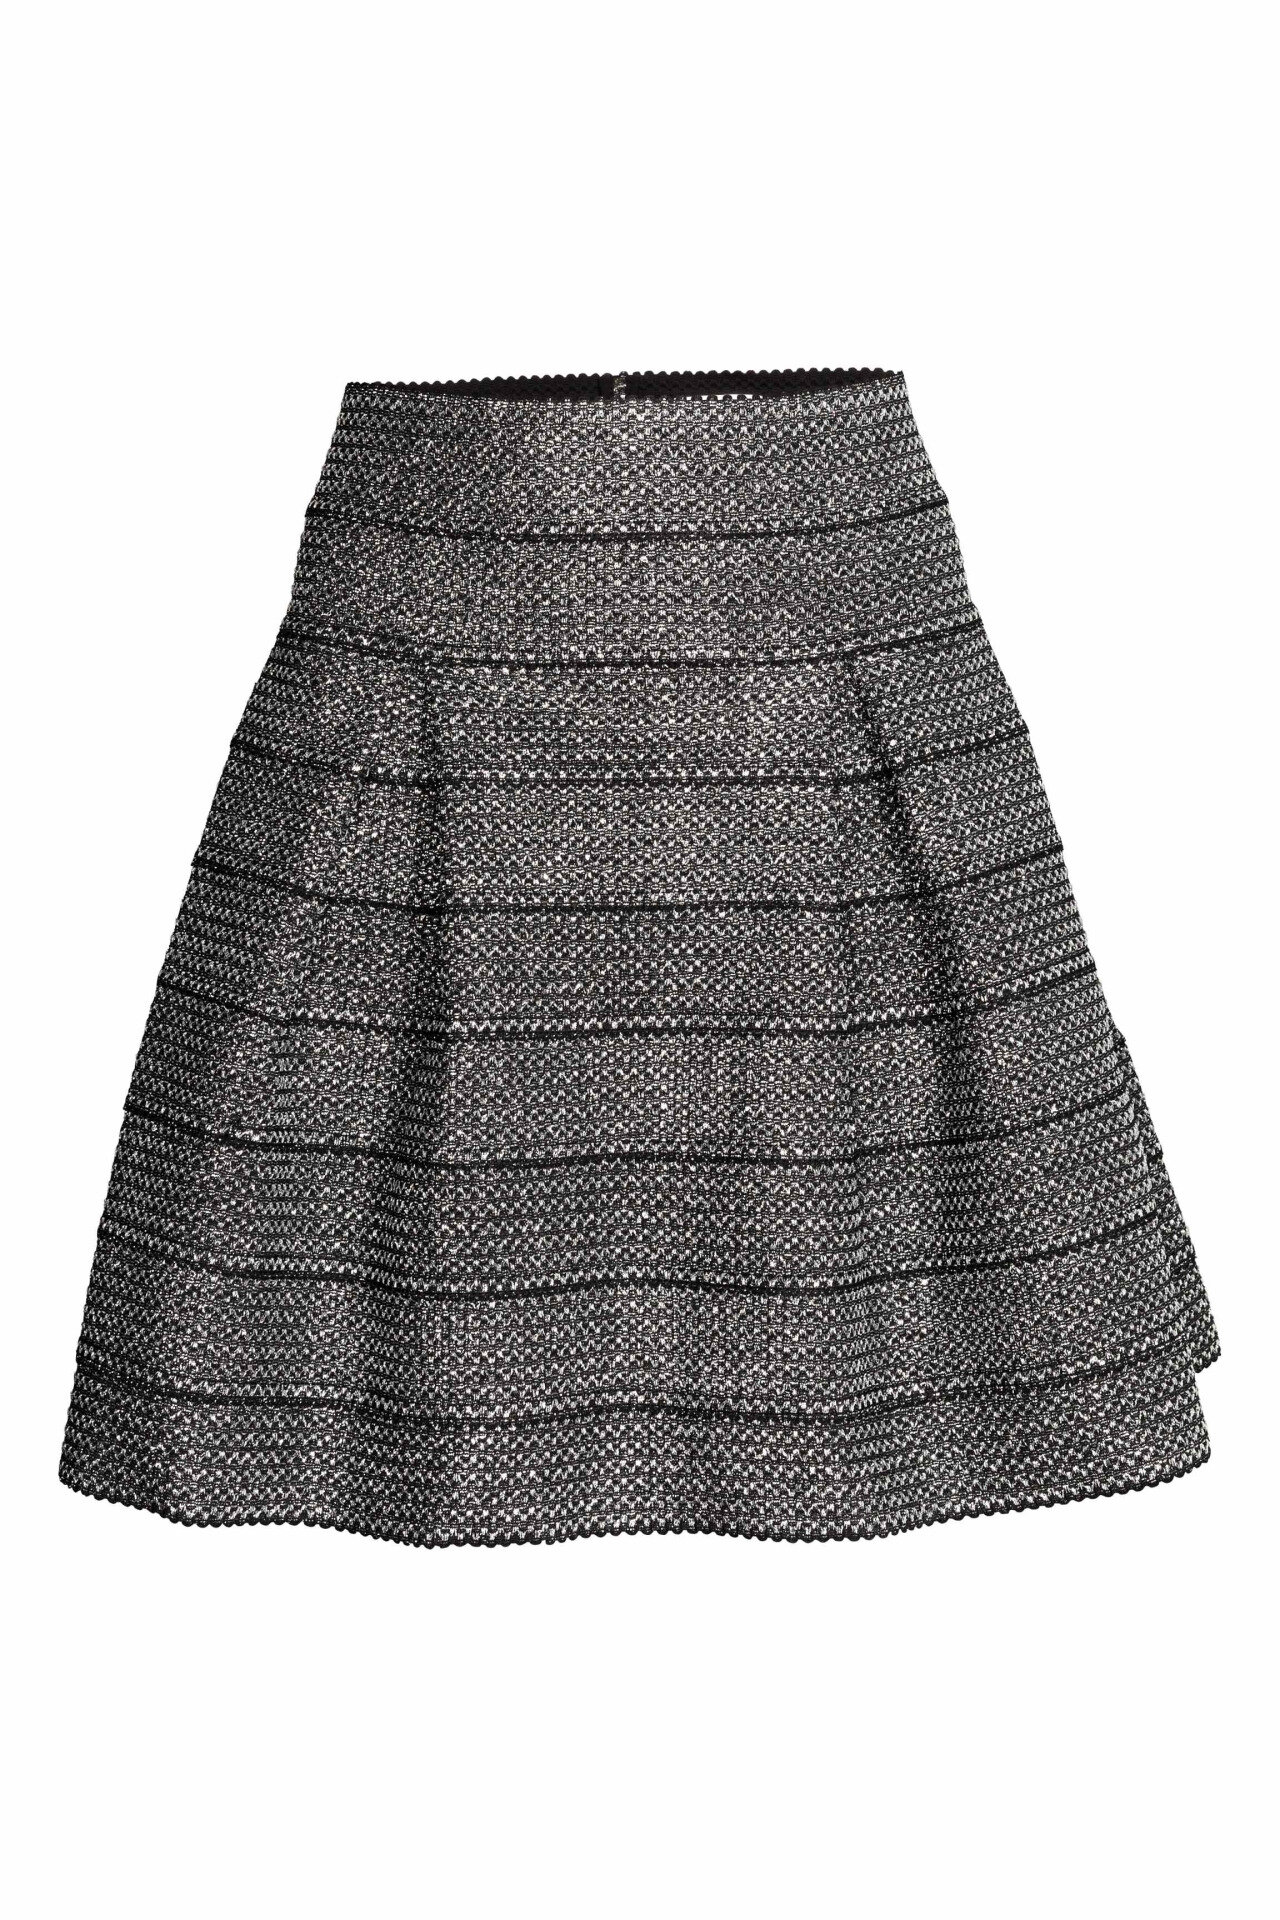 H&M Textured A-Line Skirt in Grey:Black.jpg